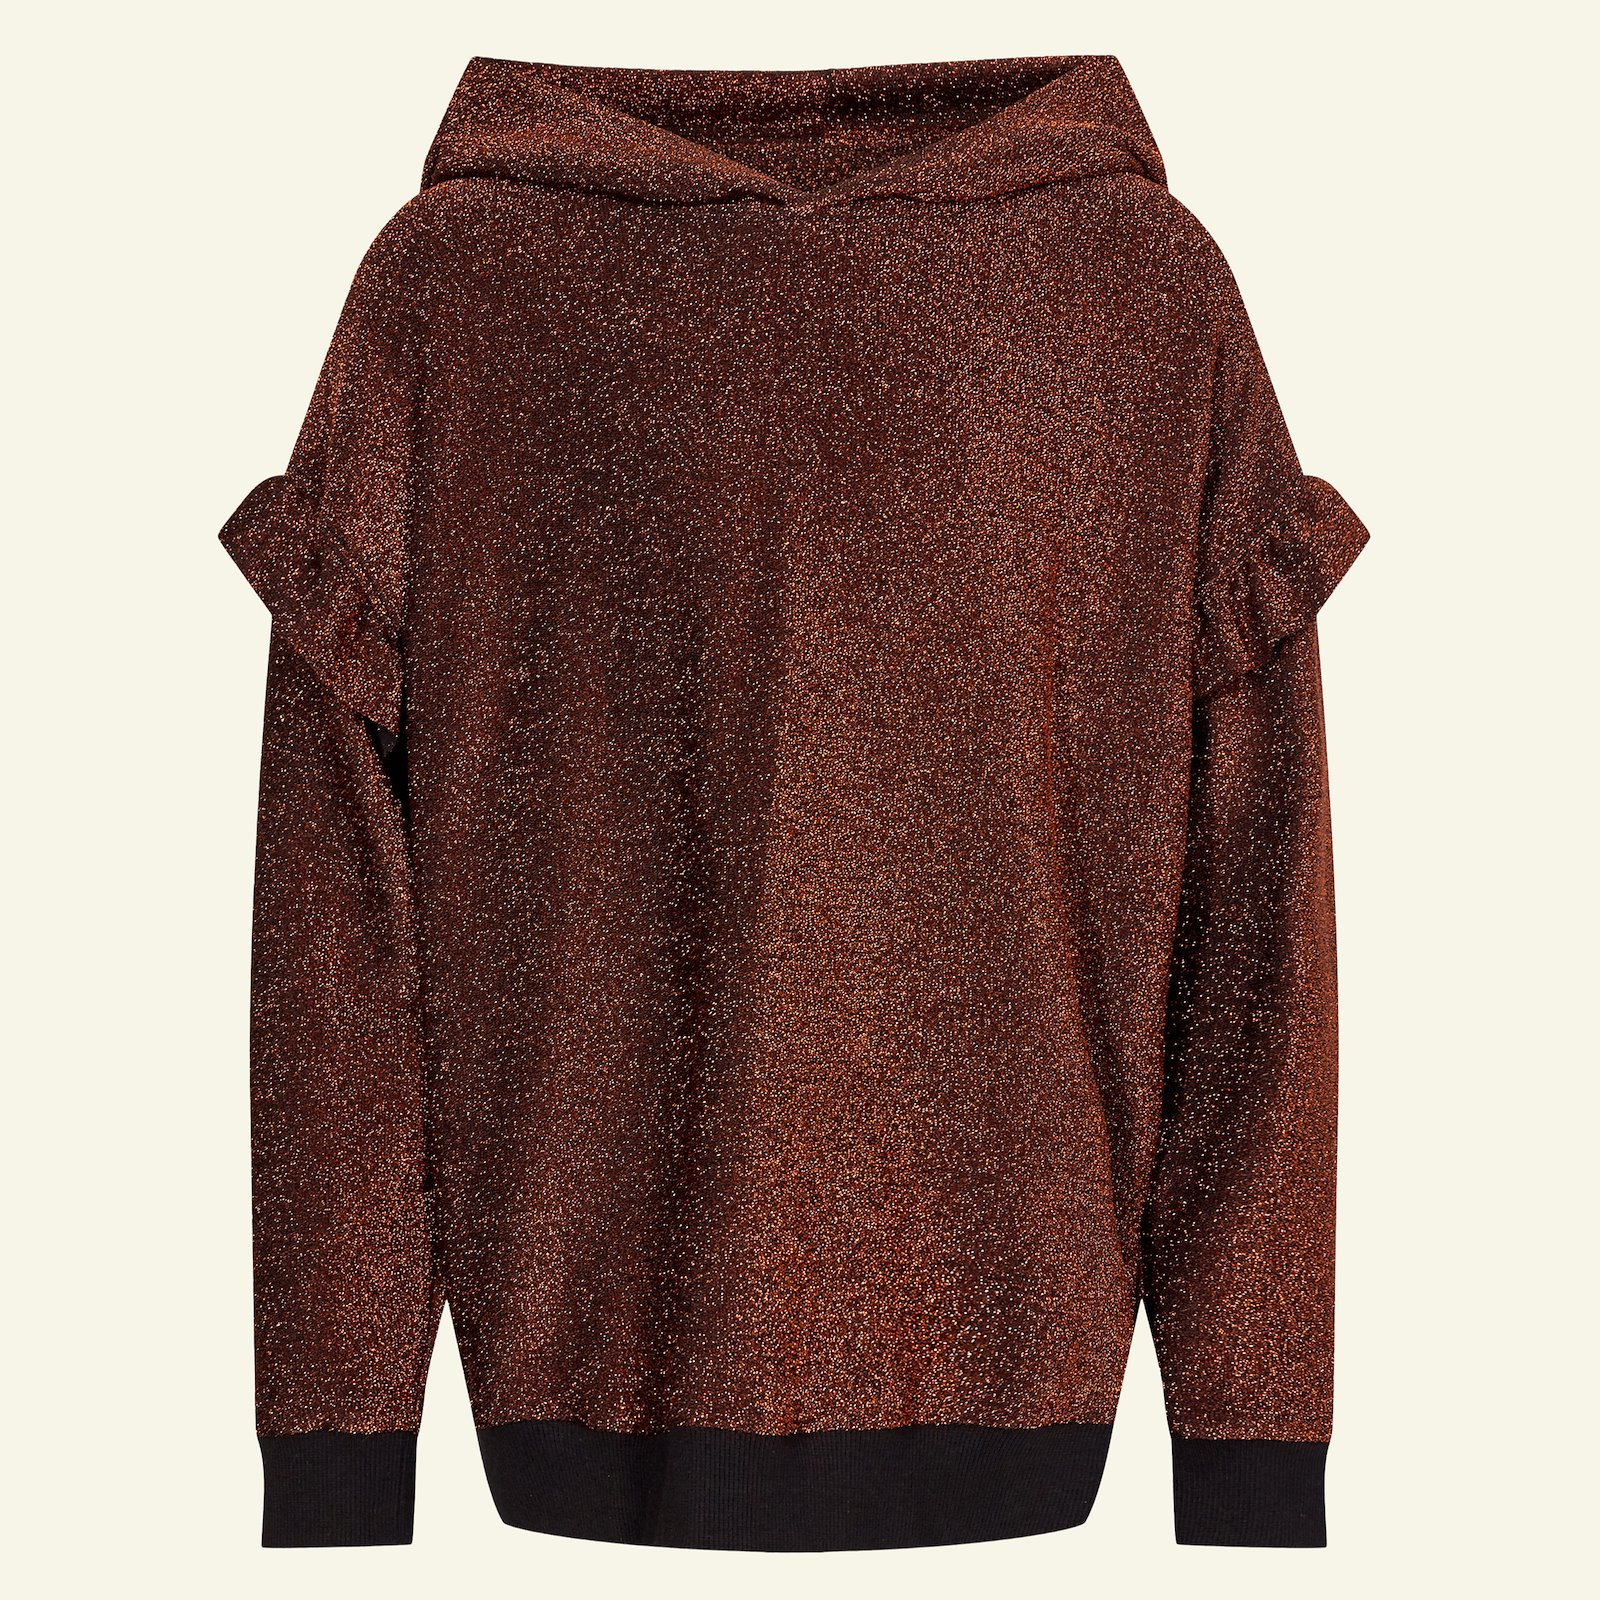 Sweatshirt w. hood + pocket, 104/4y p62020_272529_272436_sskit